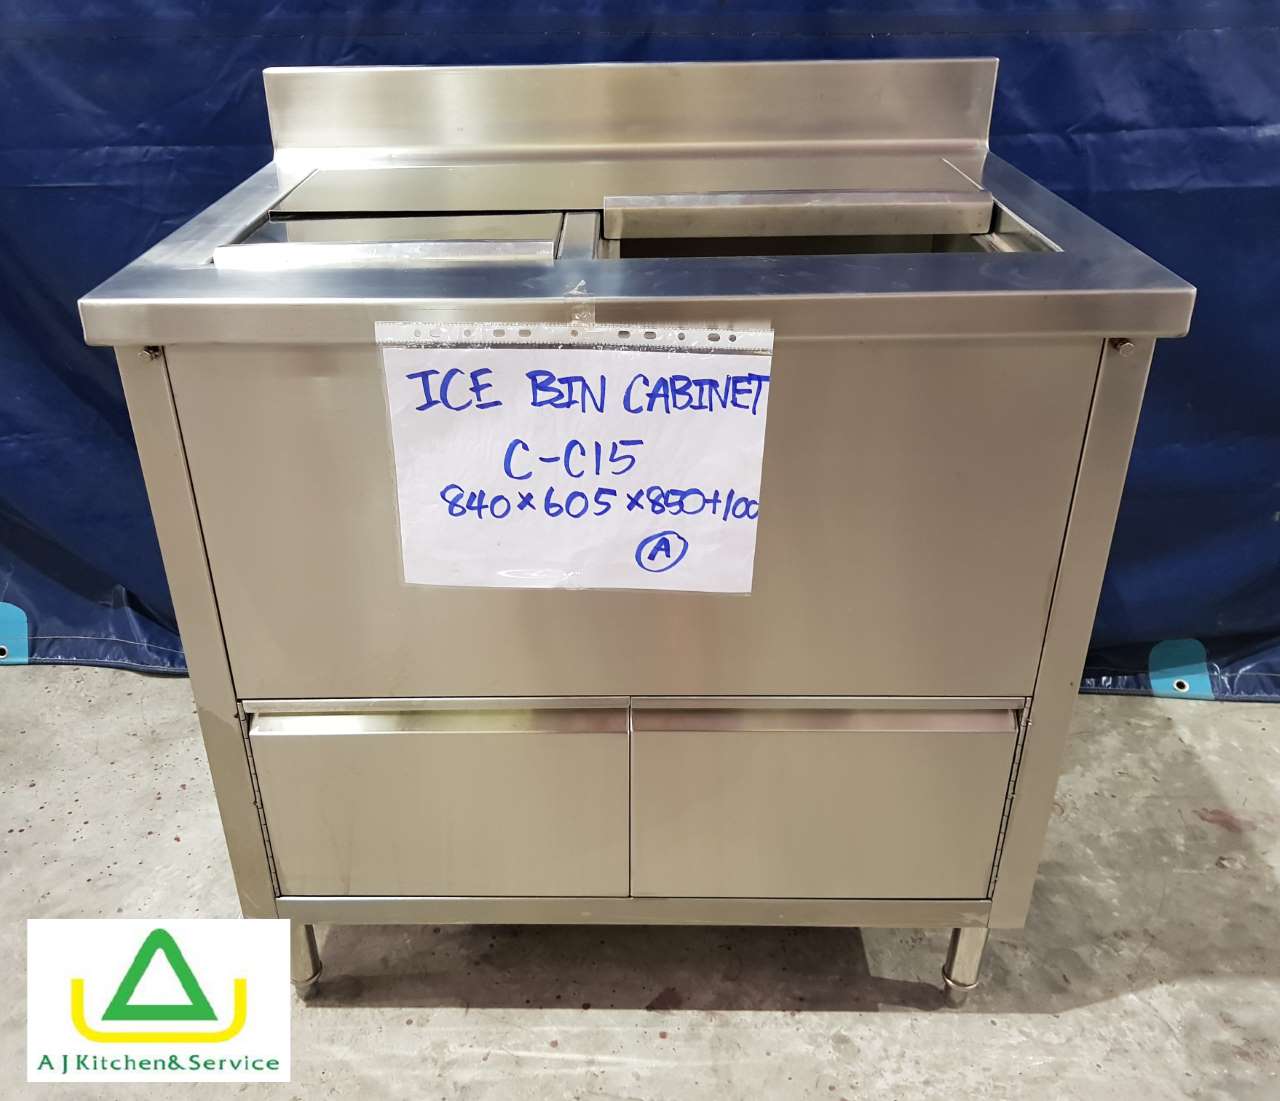 C-C15 Ice bin cabinet